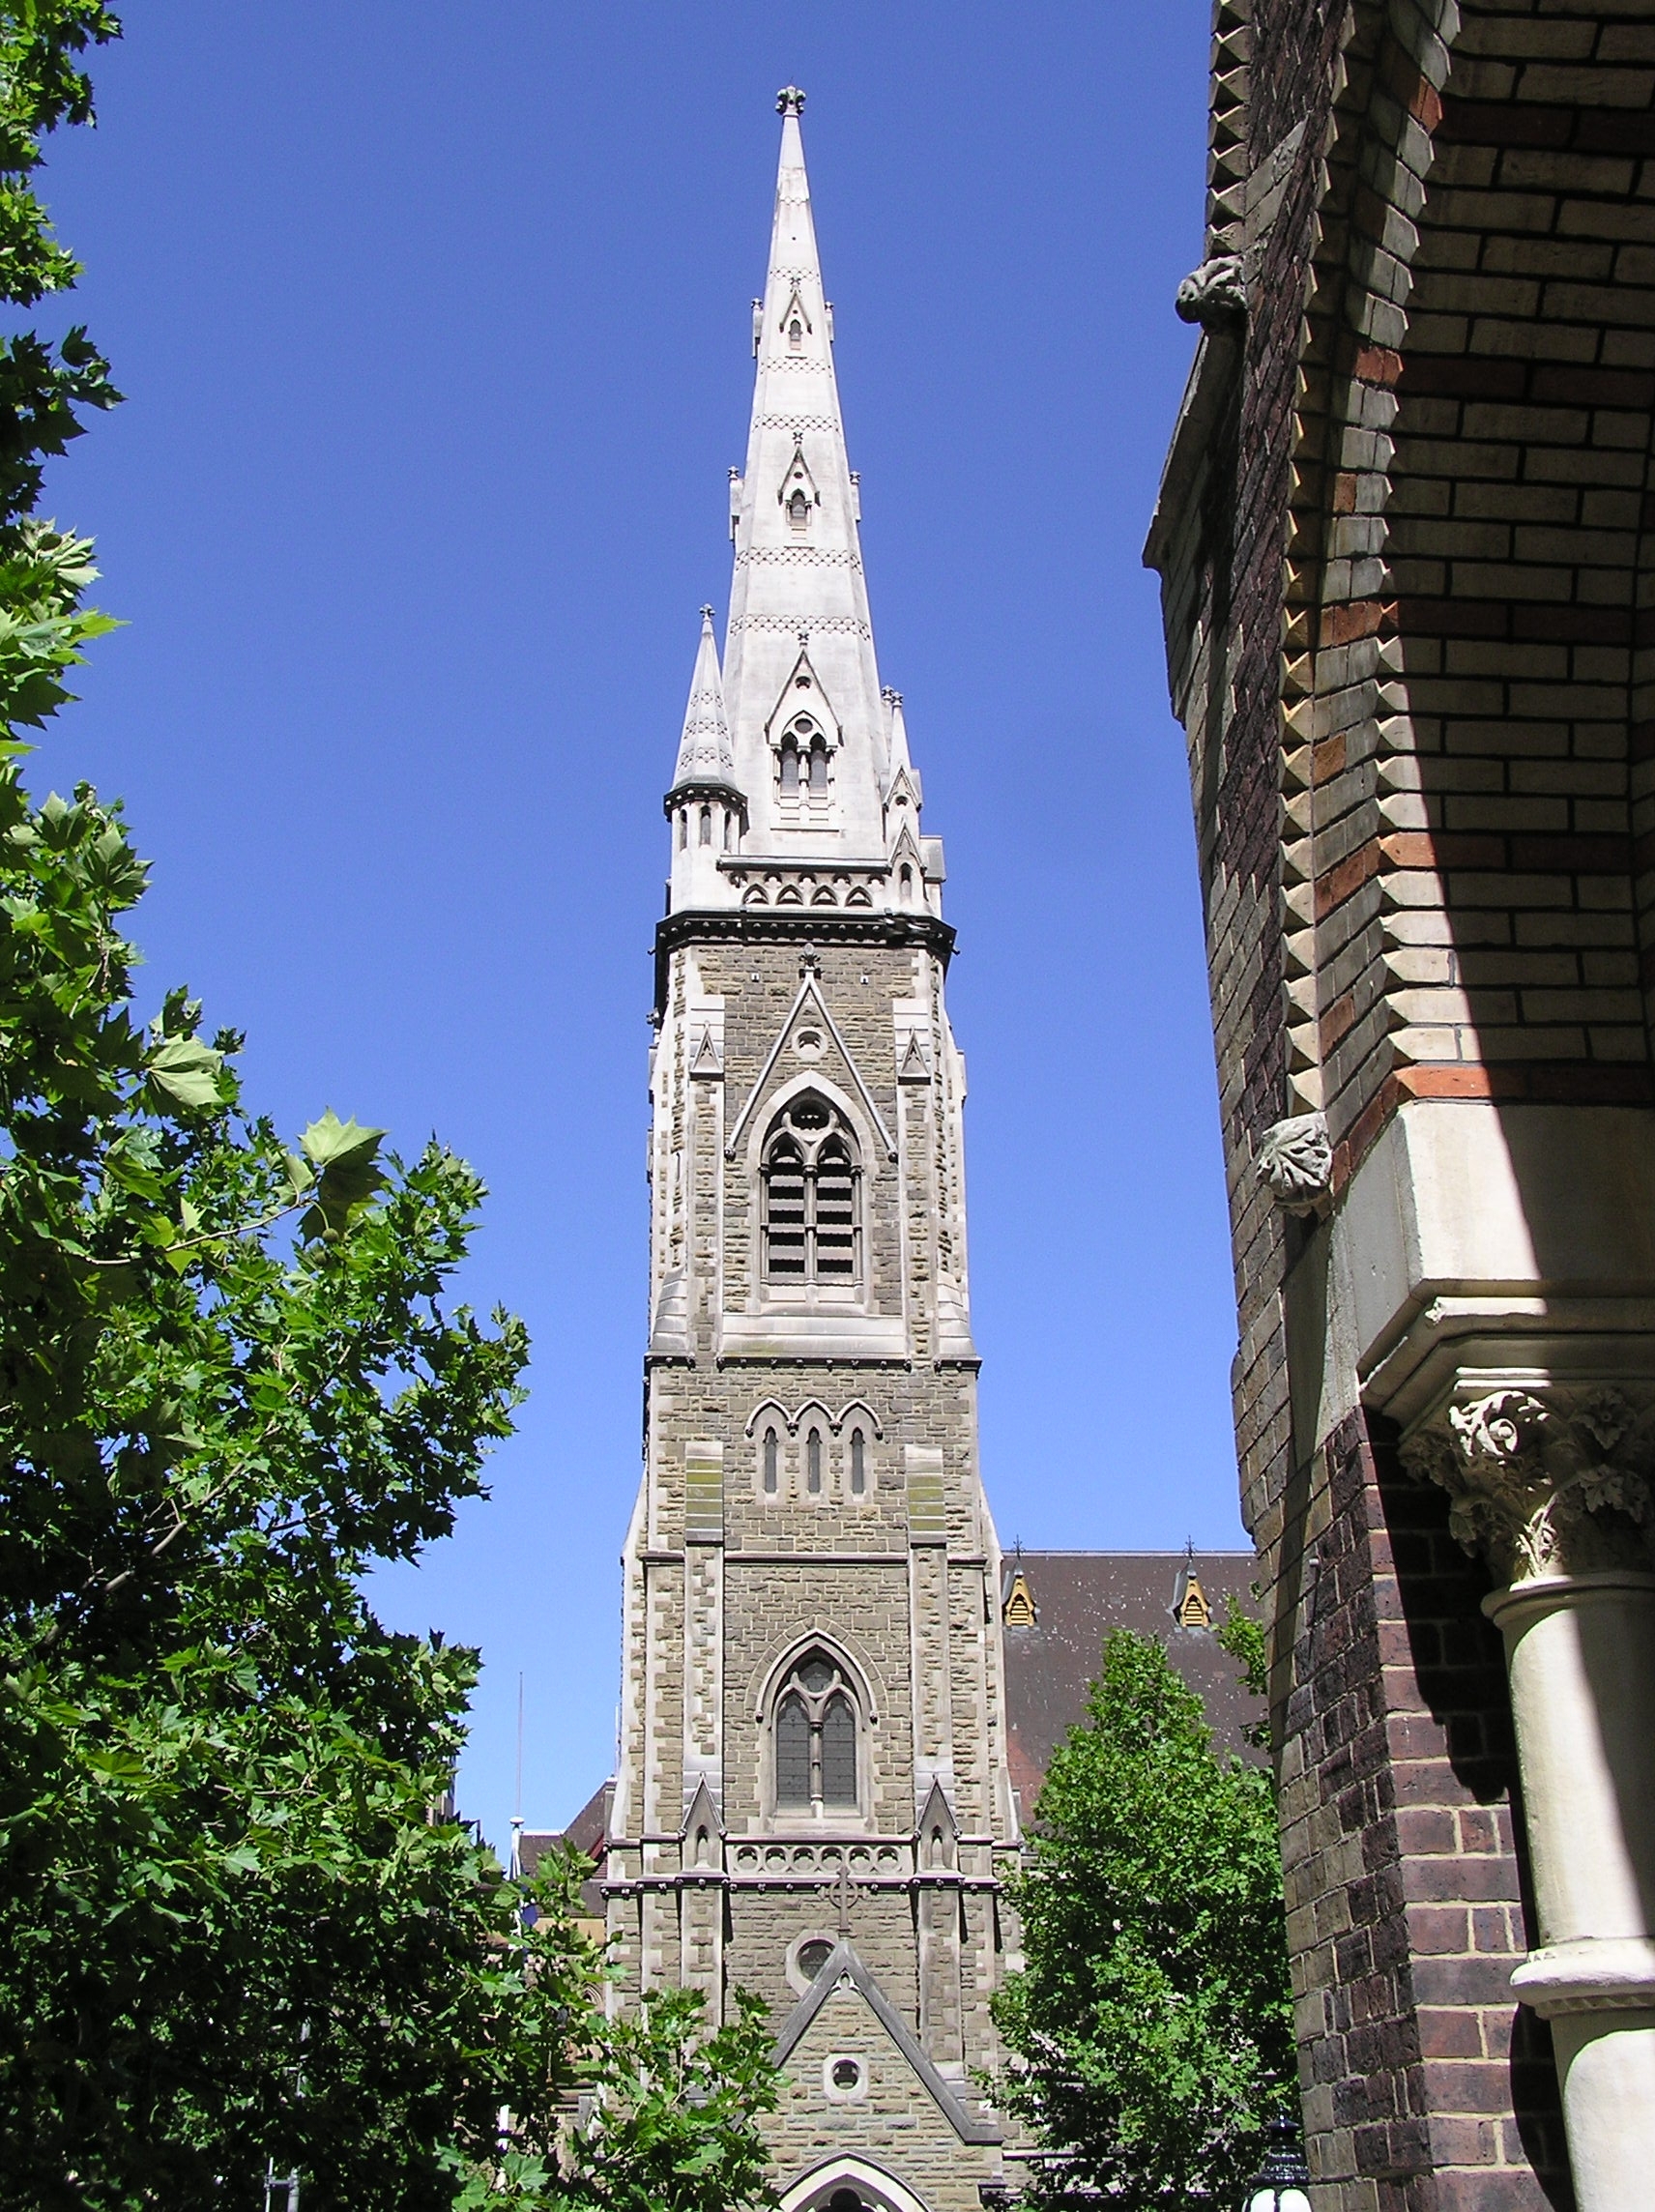 File:Scot's Church Tower.jpg - Wikimedia Commons